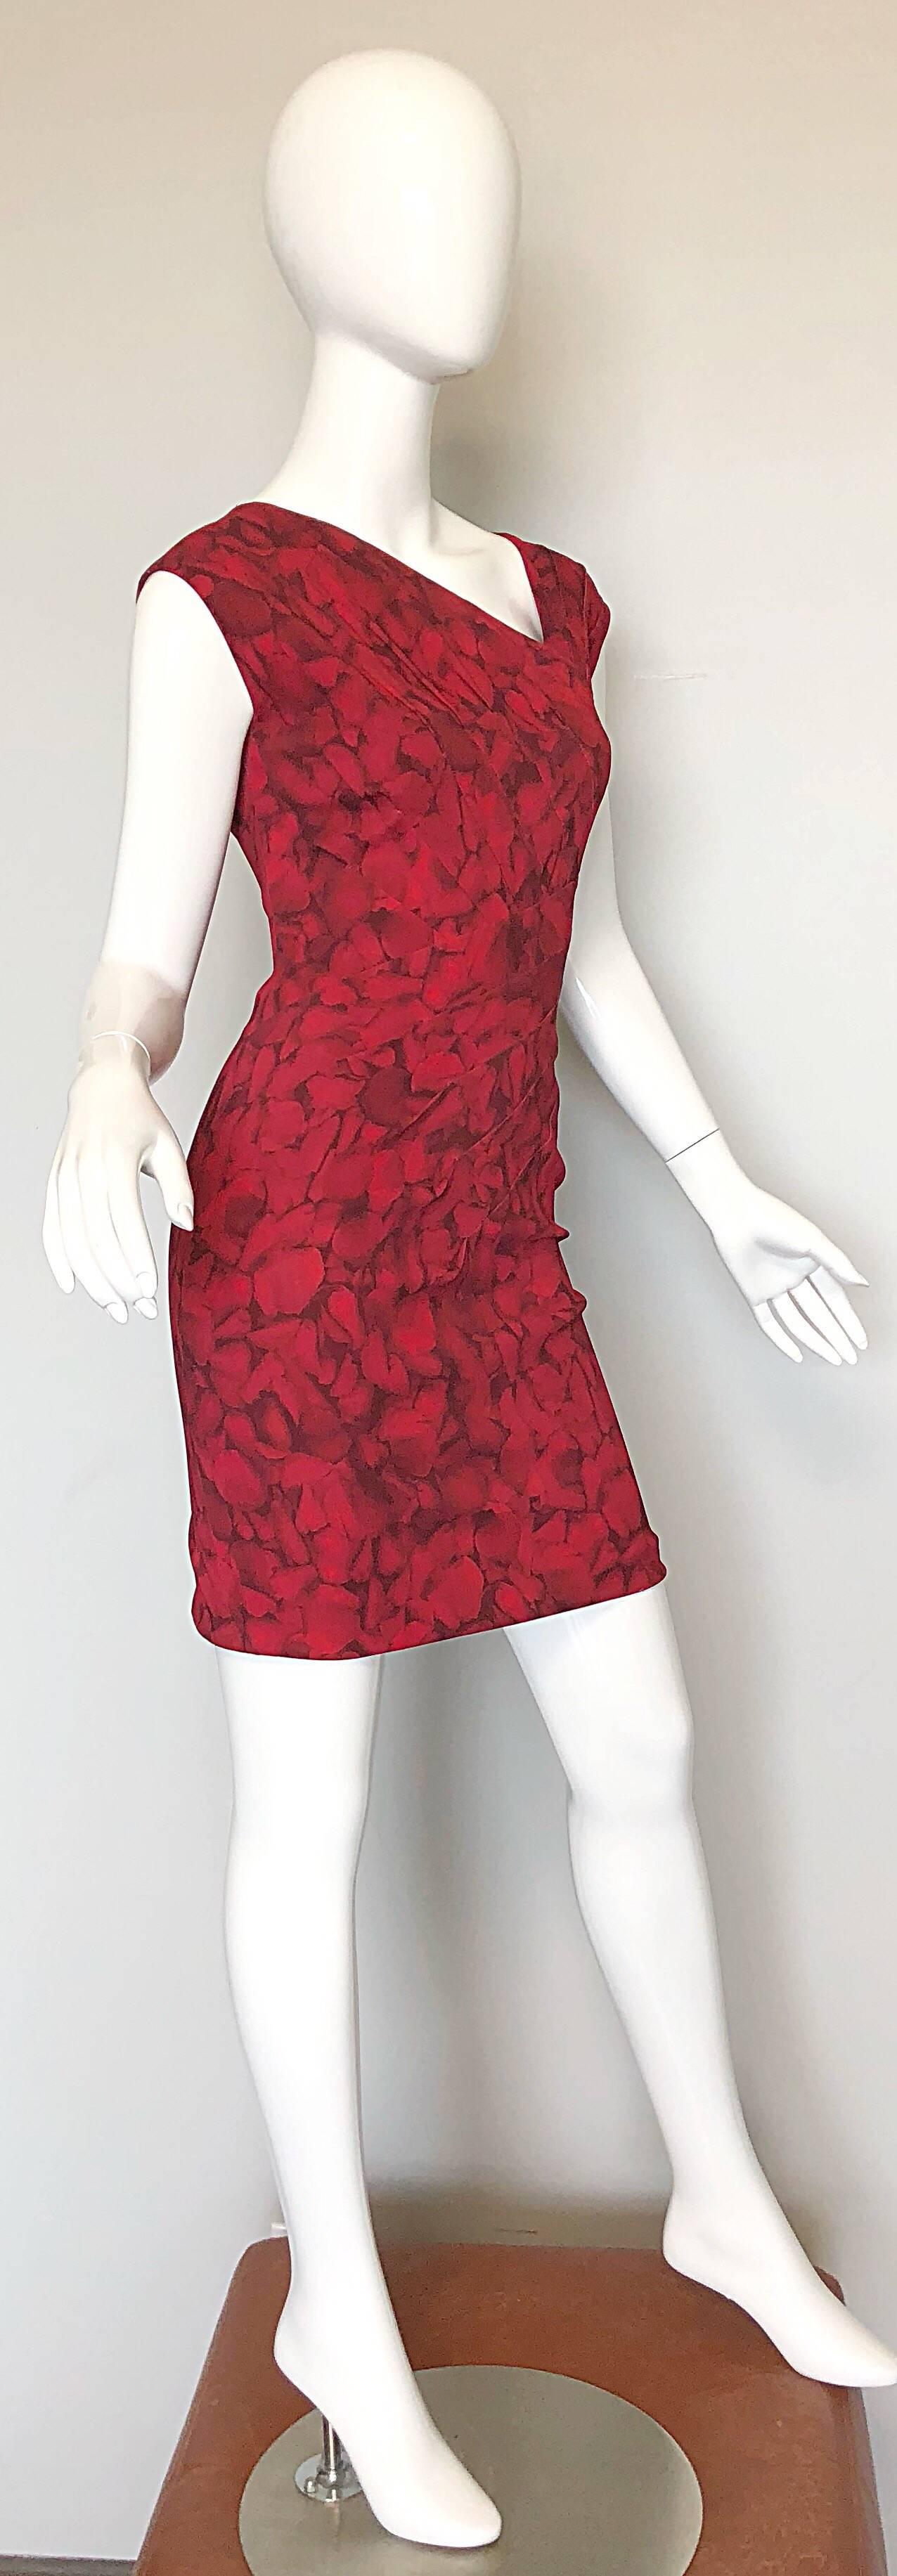 Michael Kors Collection 2010 Runway Size 4 / 6 Rose Petal Red + Black Mini Dress For Sale 1